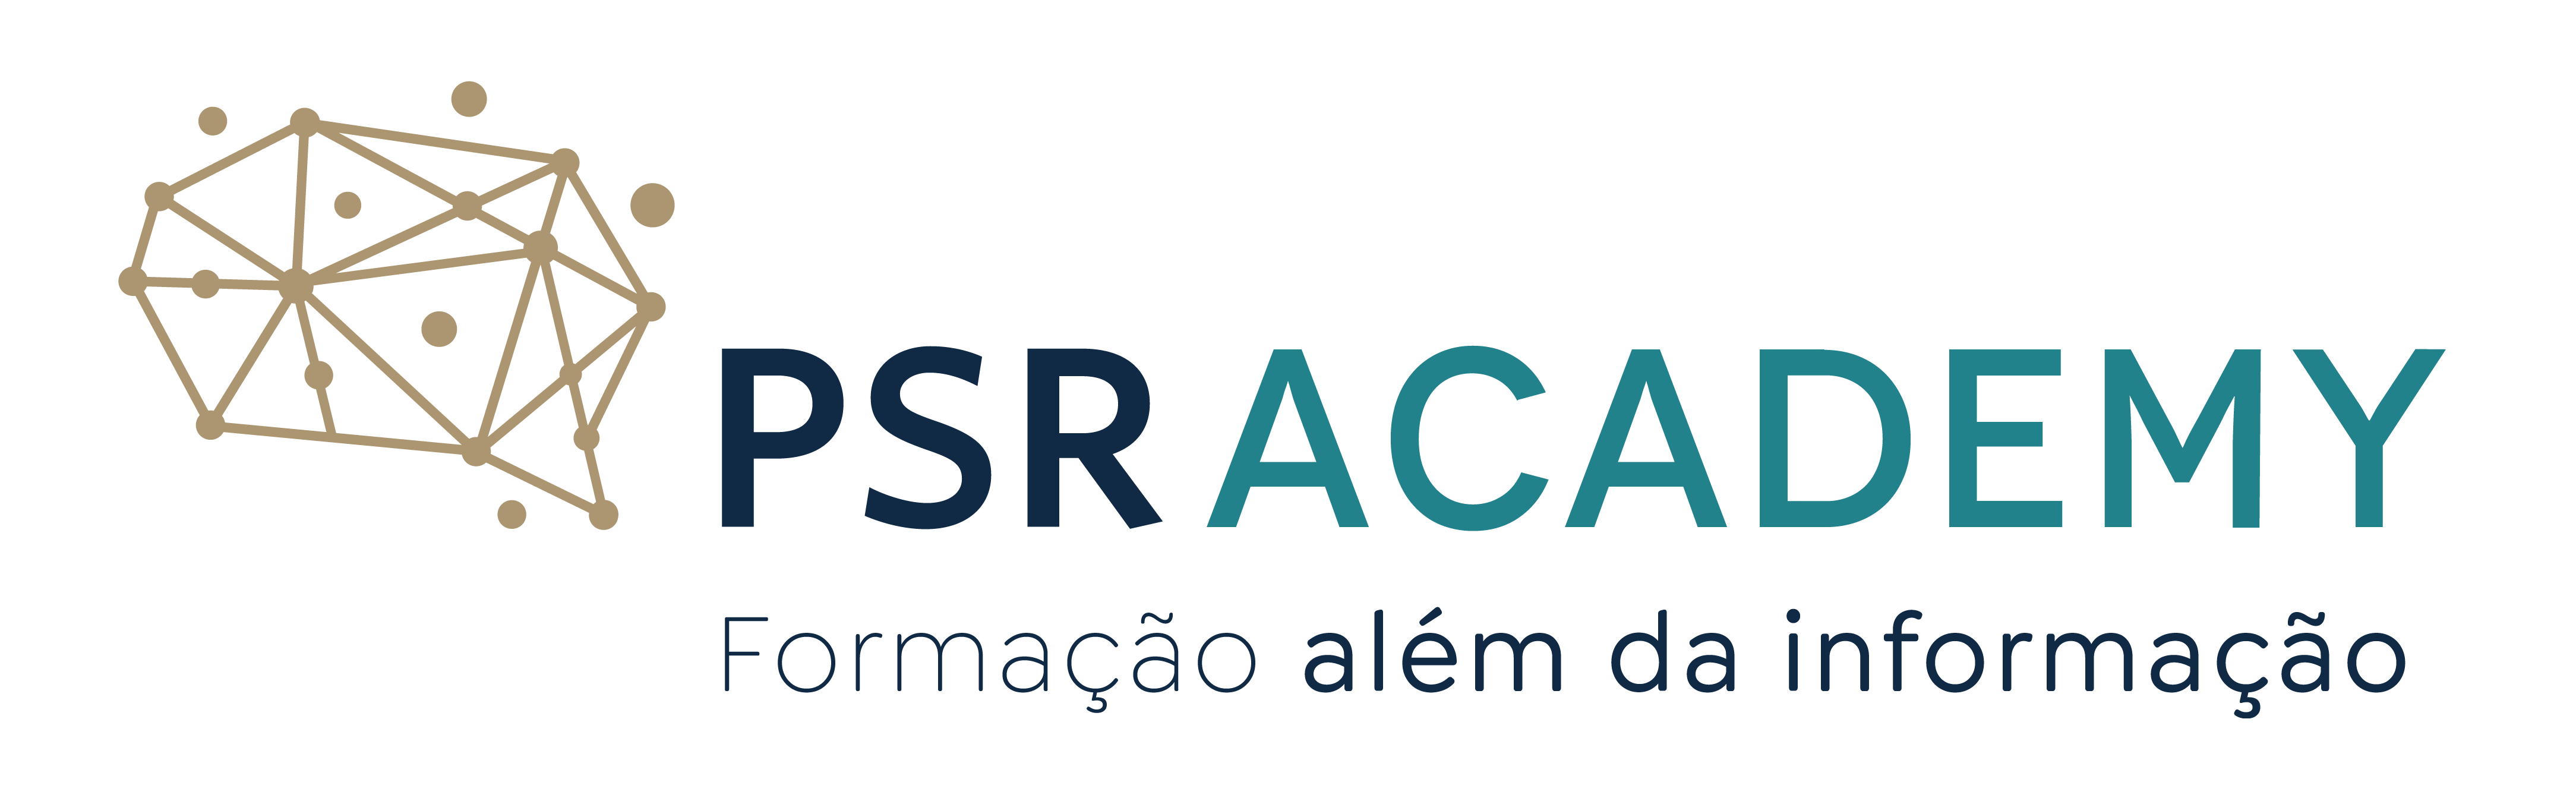 logo-psr-academy-slogan-transp